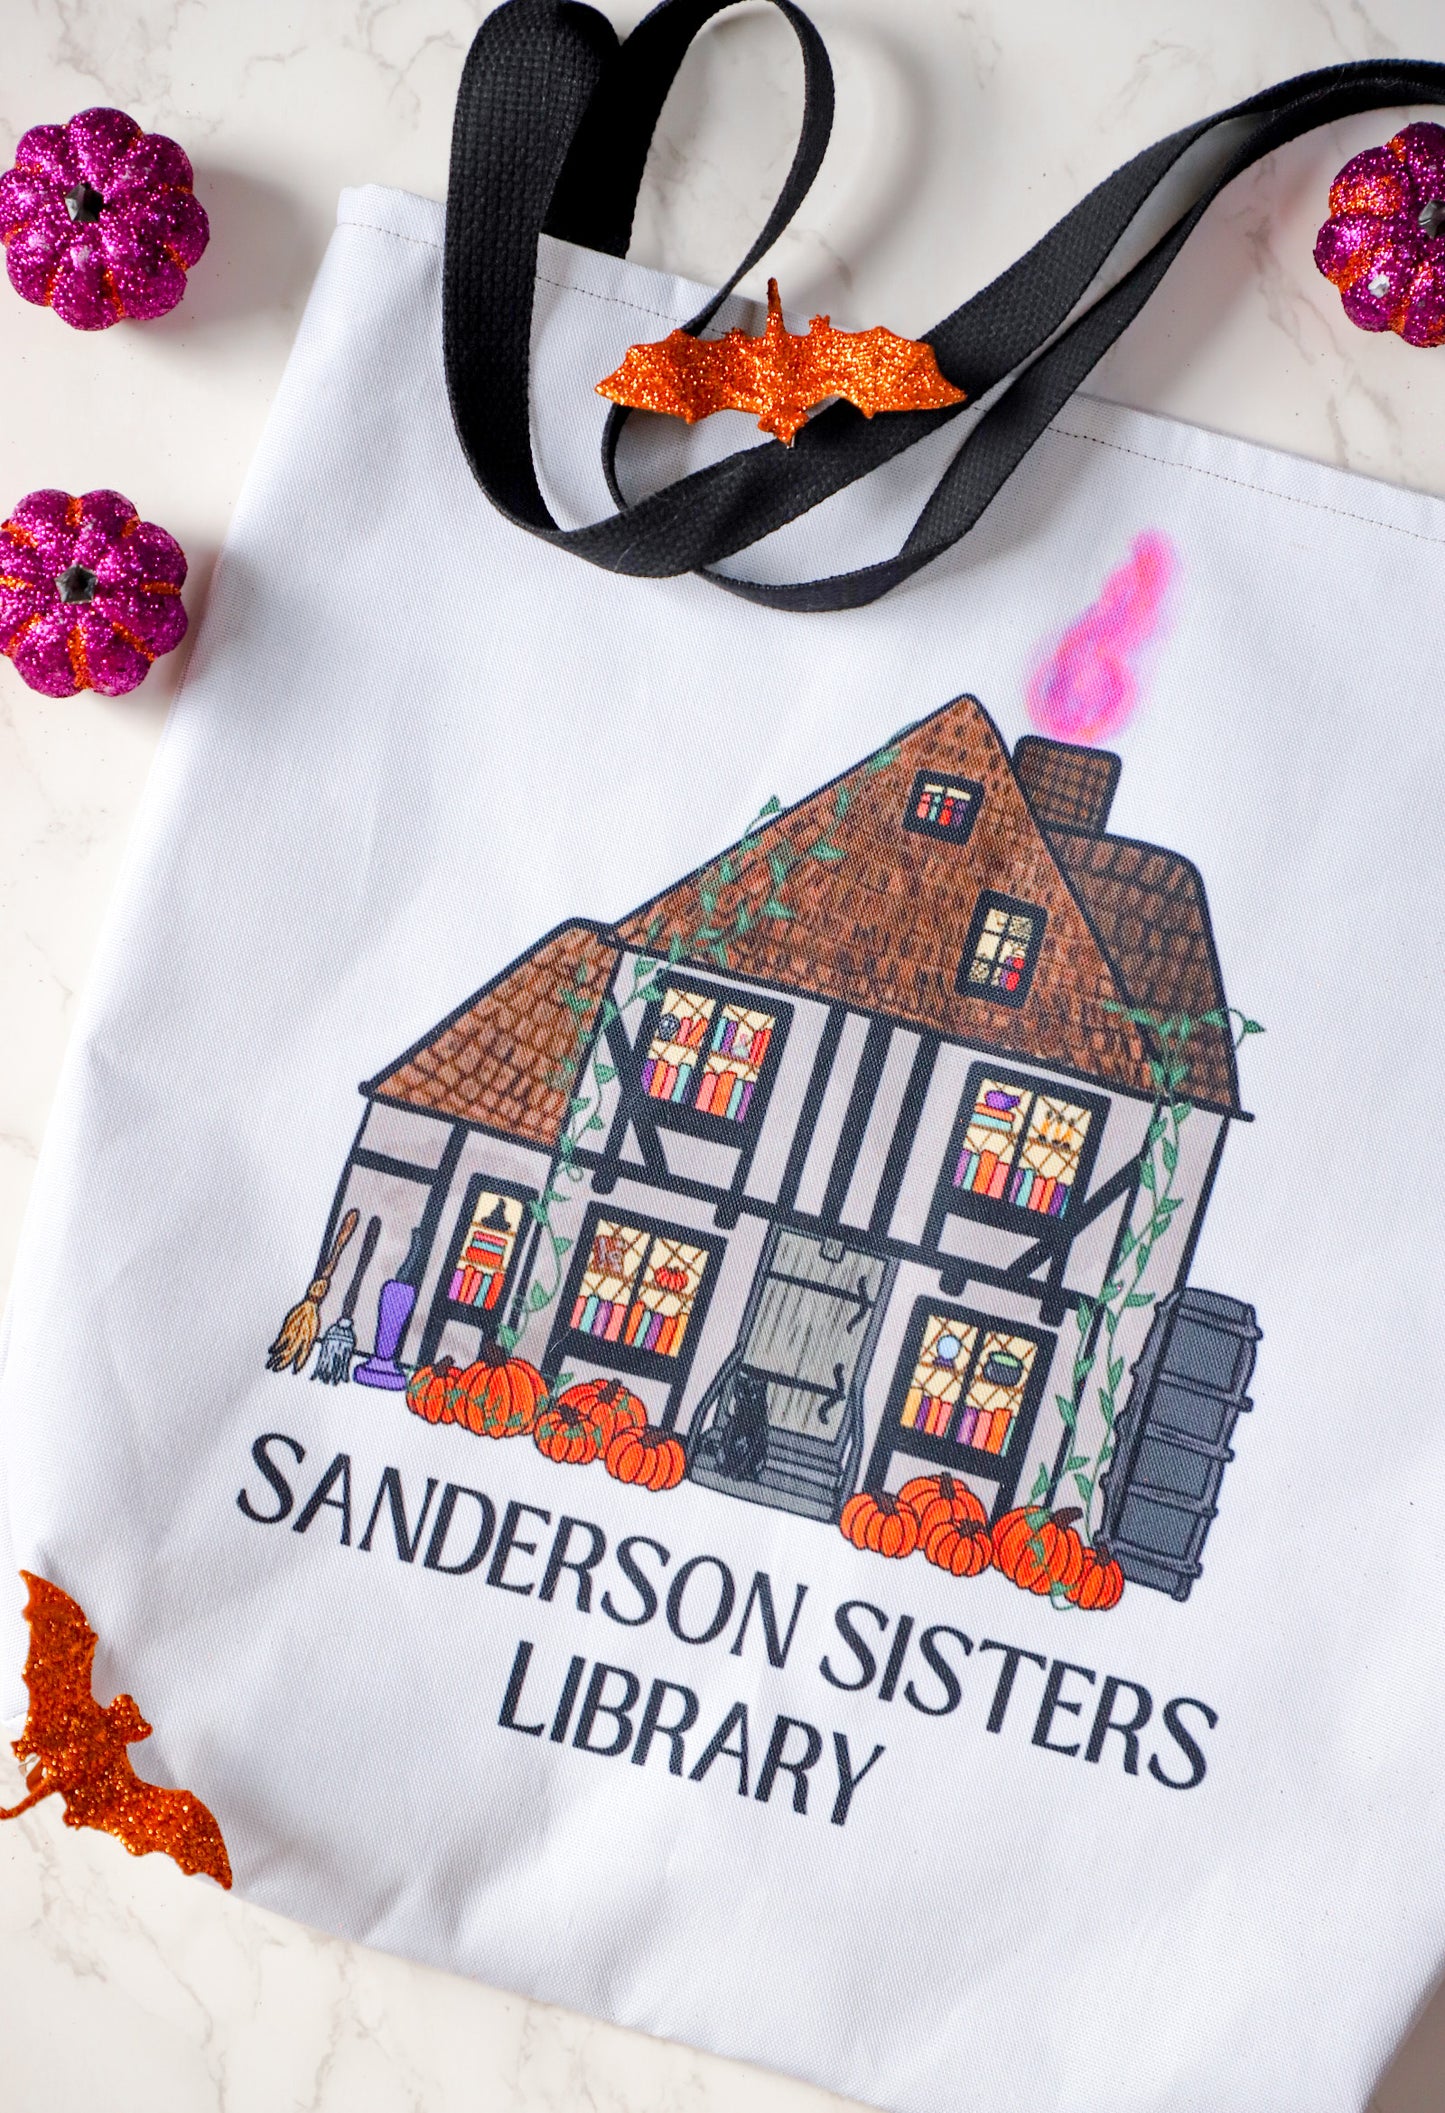 Sanderson Sisters Library Bag